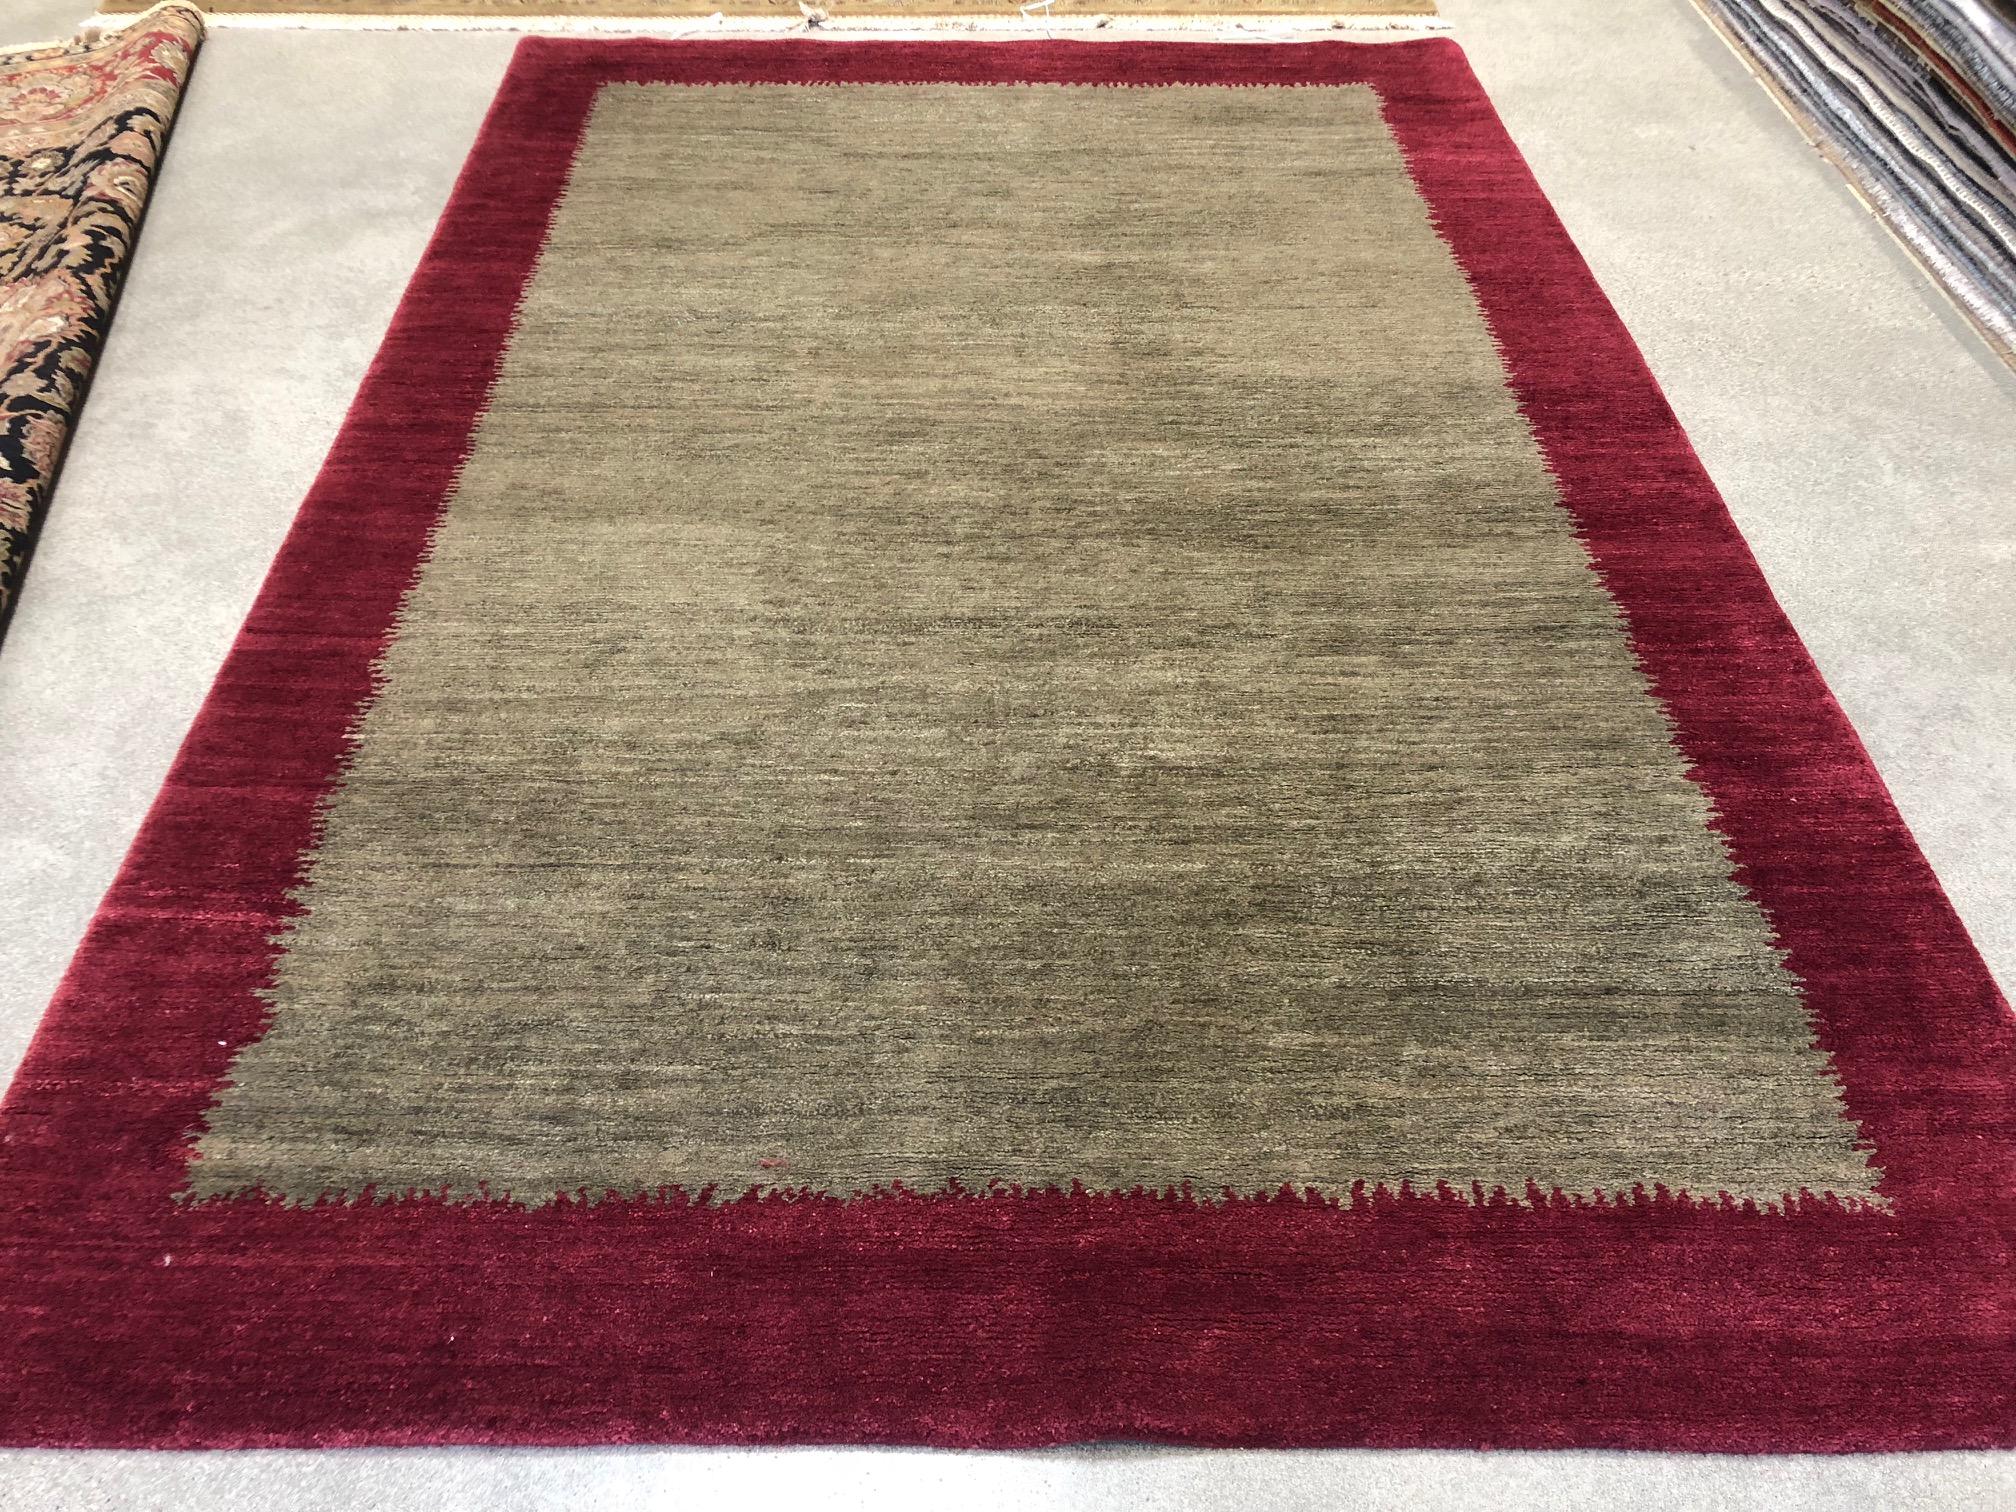 Teal rug with maroon border
colors: teal, maroon.